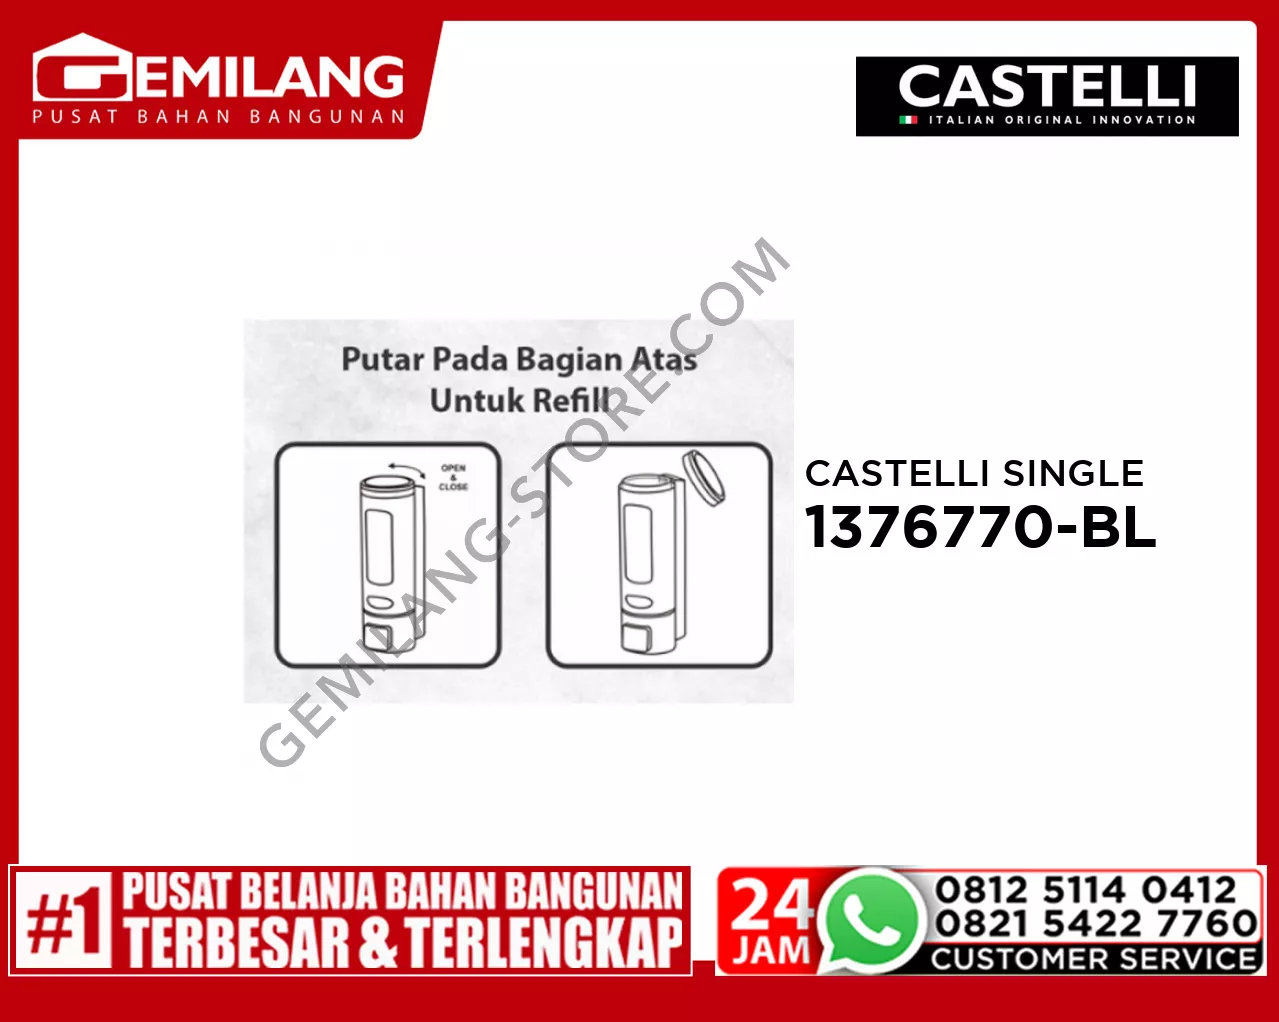 CASTELLI SINGLE SOAP DISPENSER BLACK 1376770-BL